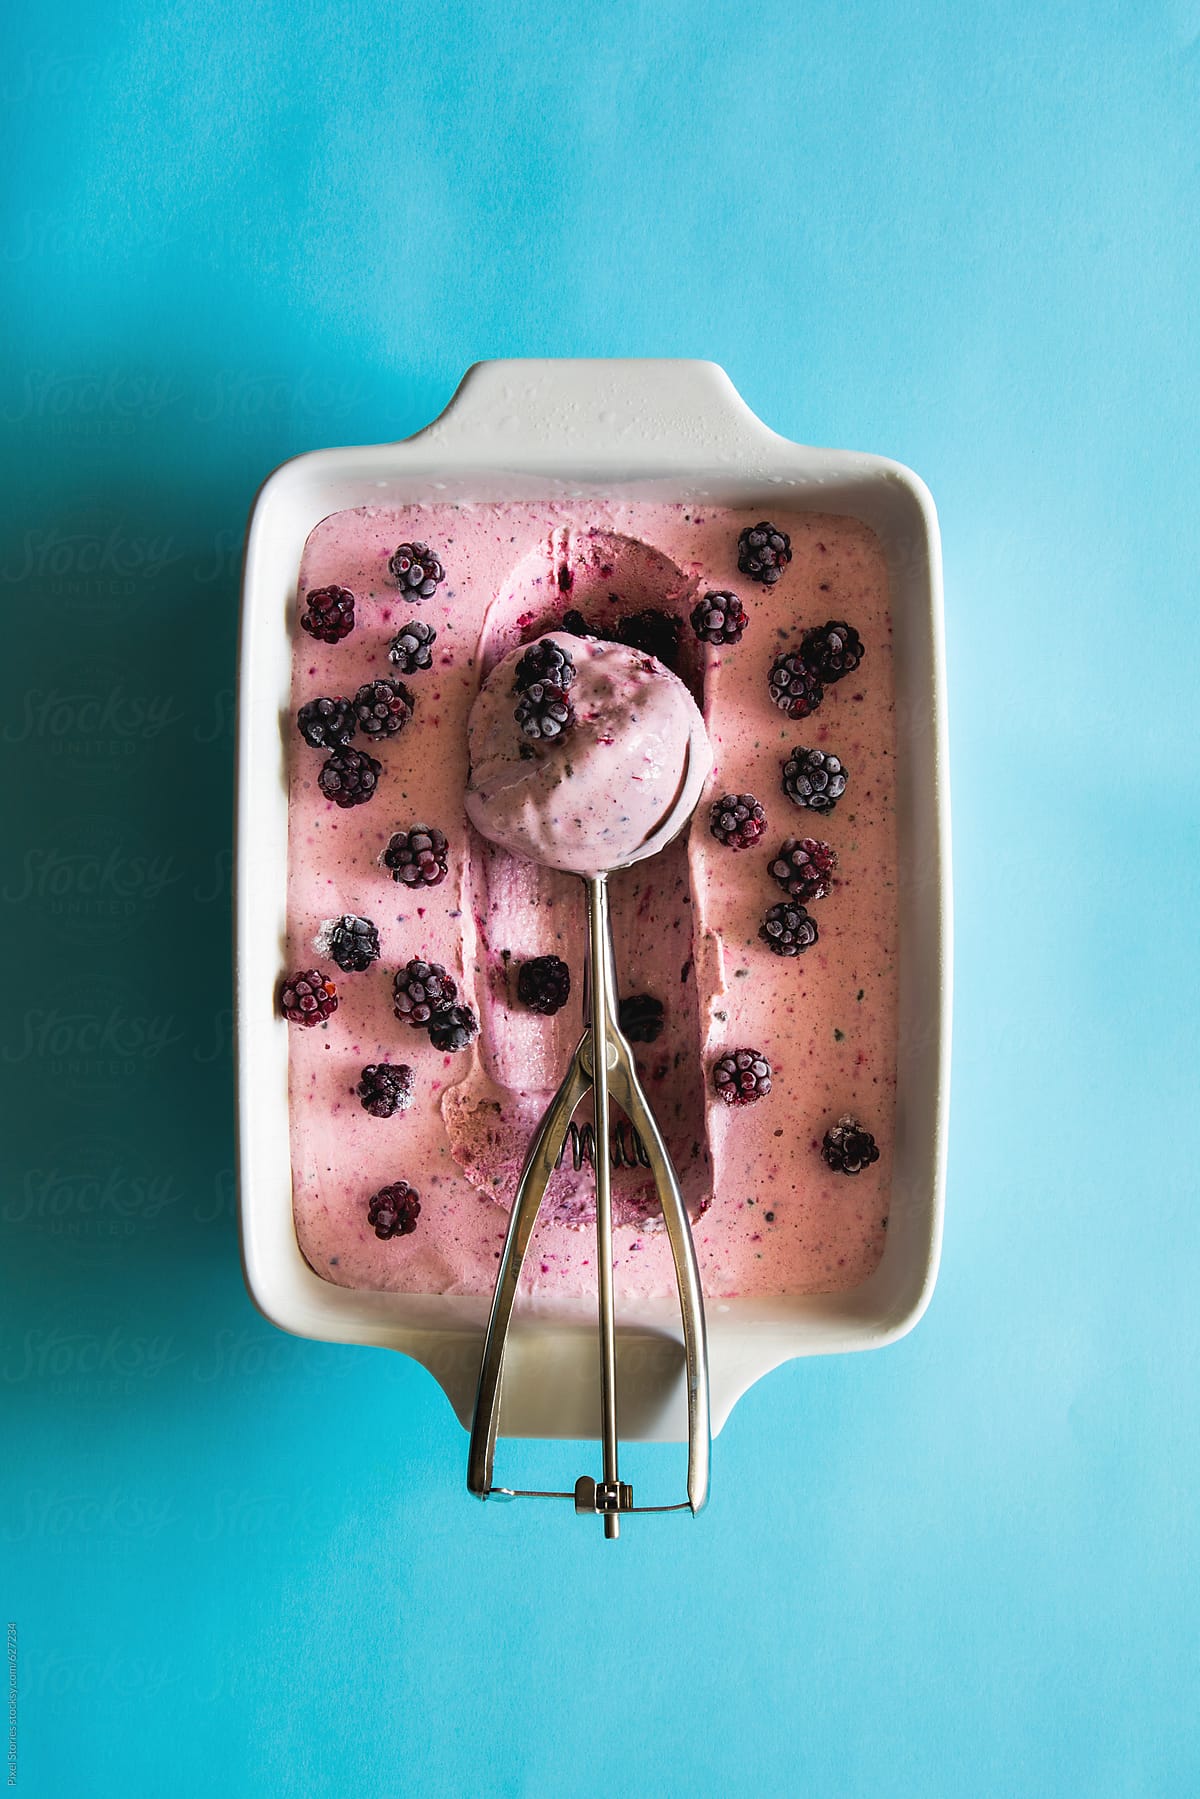 Food: homemade blackberry ice cream with scoop